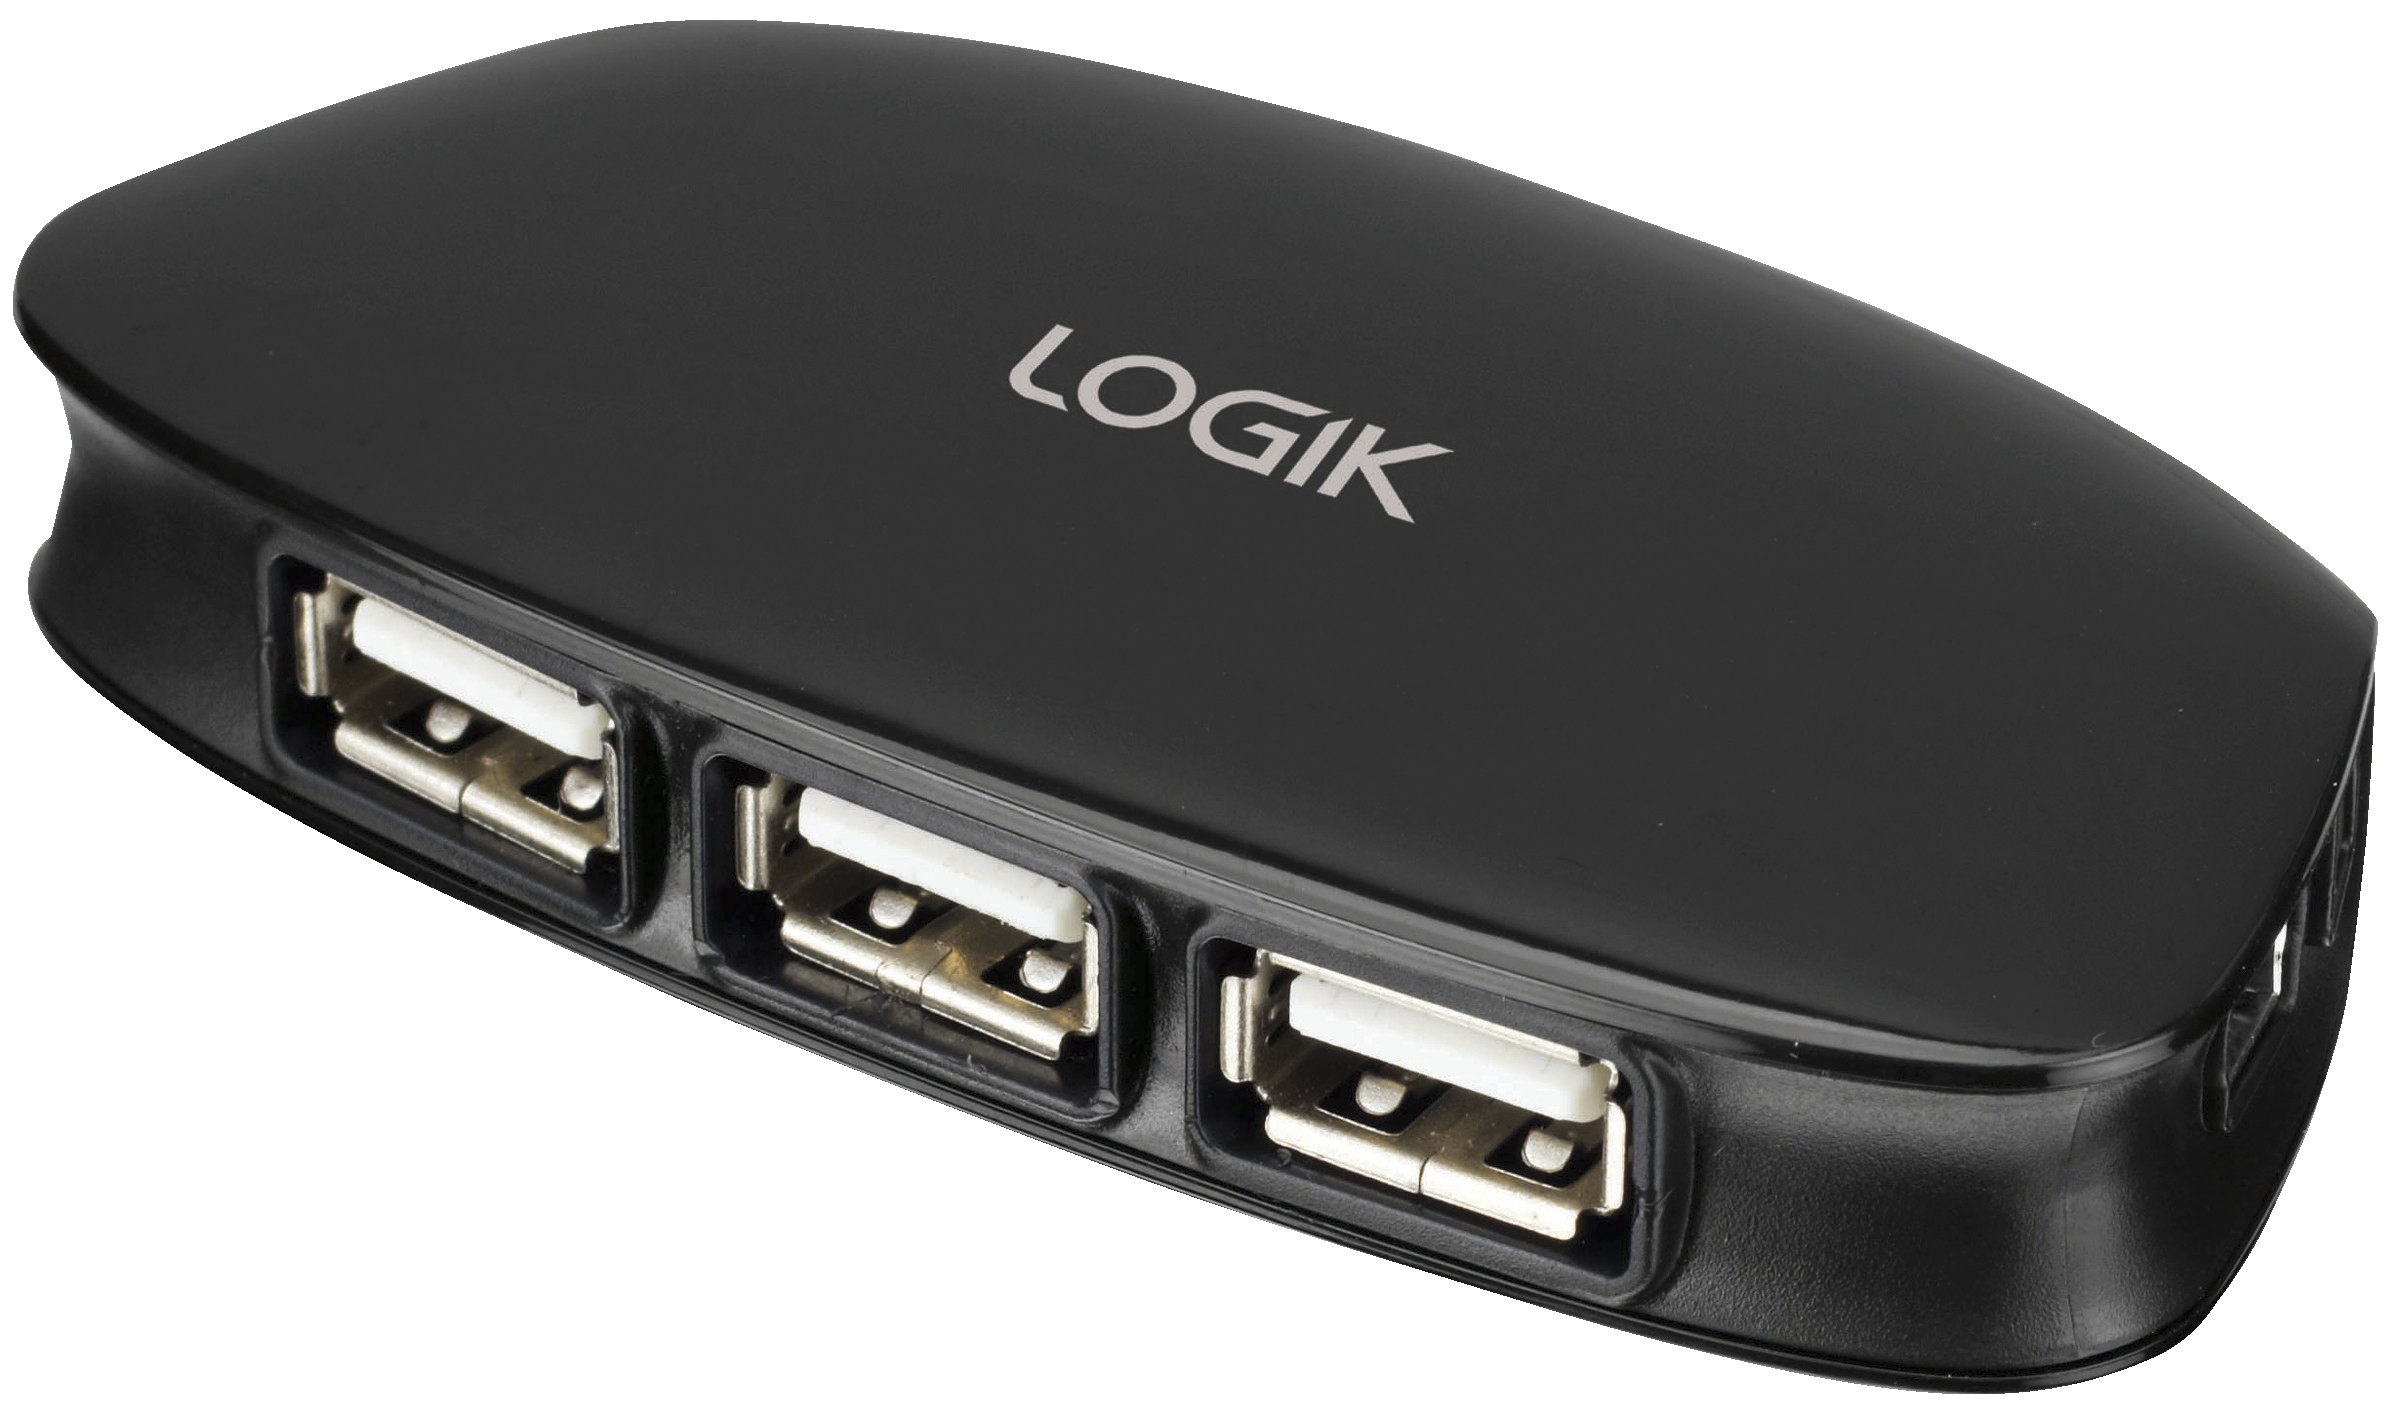 Logik 4-port USB 2.0 hub - Elgiganten